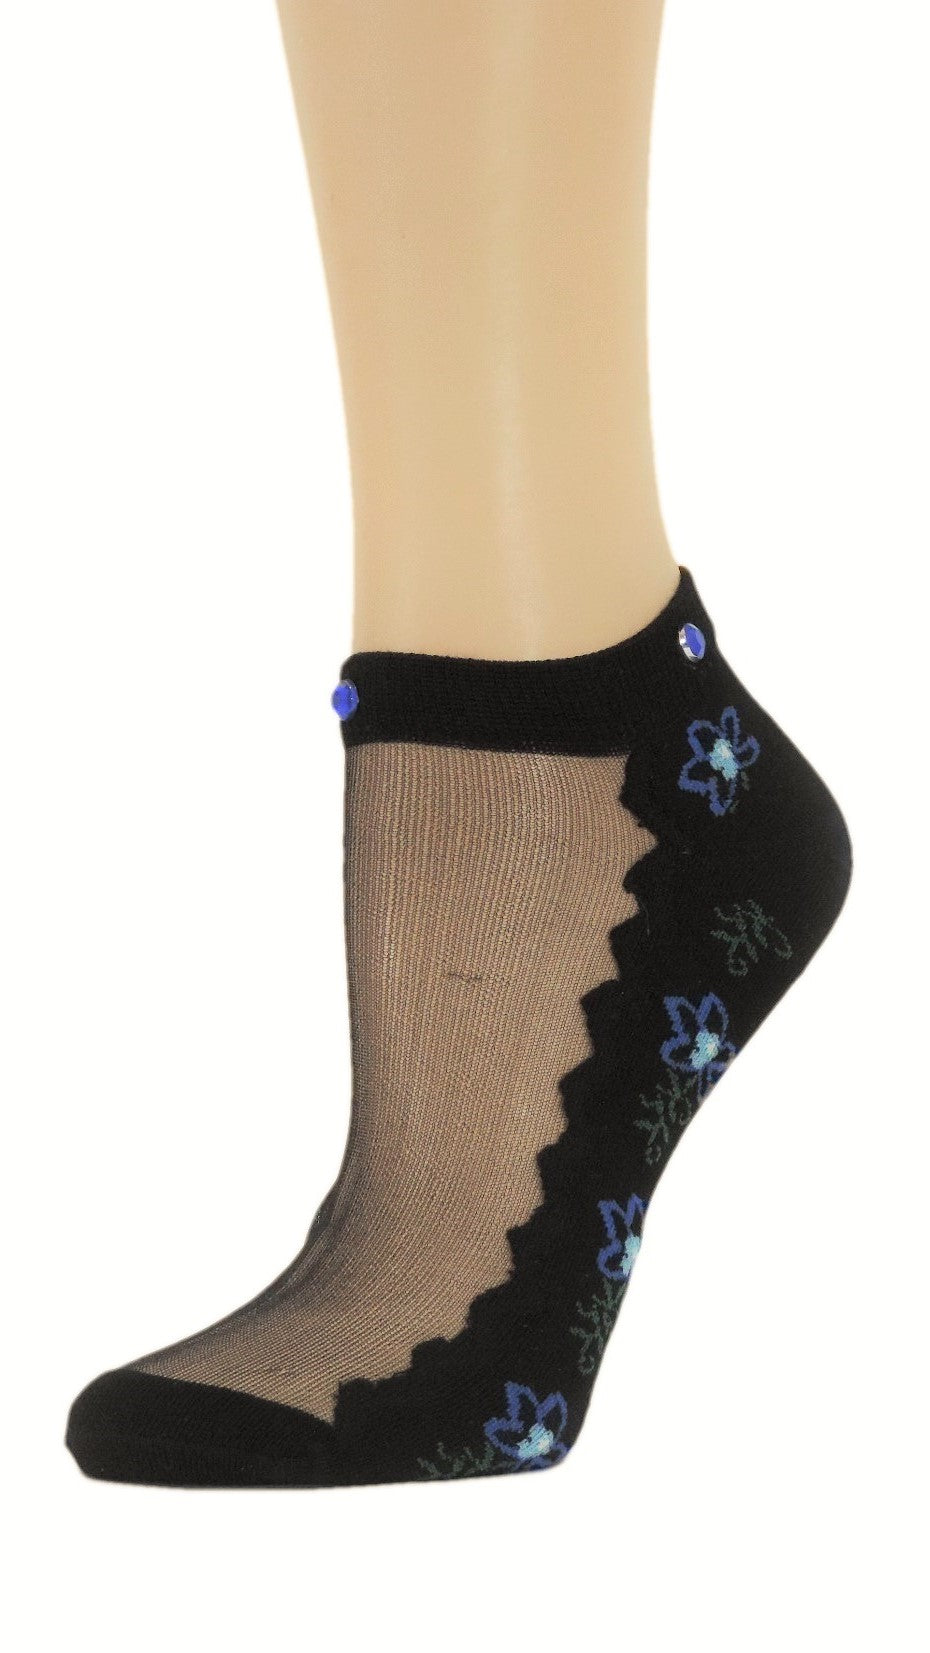 Charming Sea Blue Custom Ankle Sheer Socks with beads - Global Trendz Fashion®